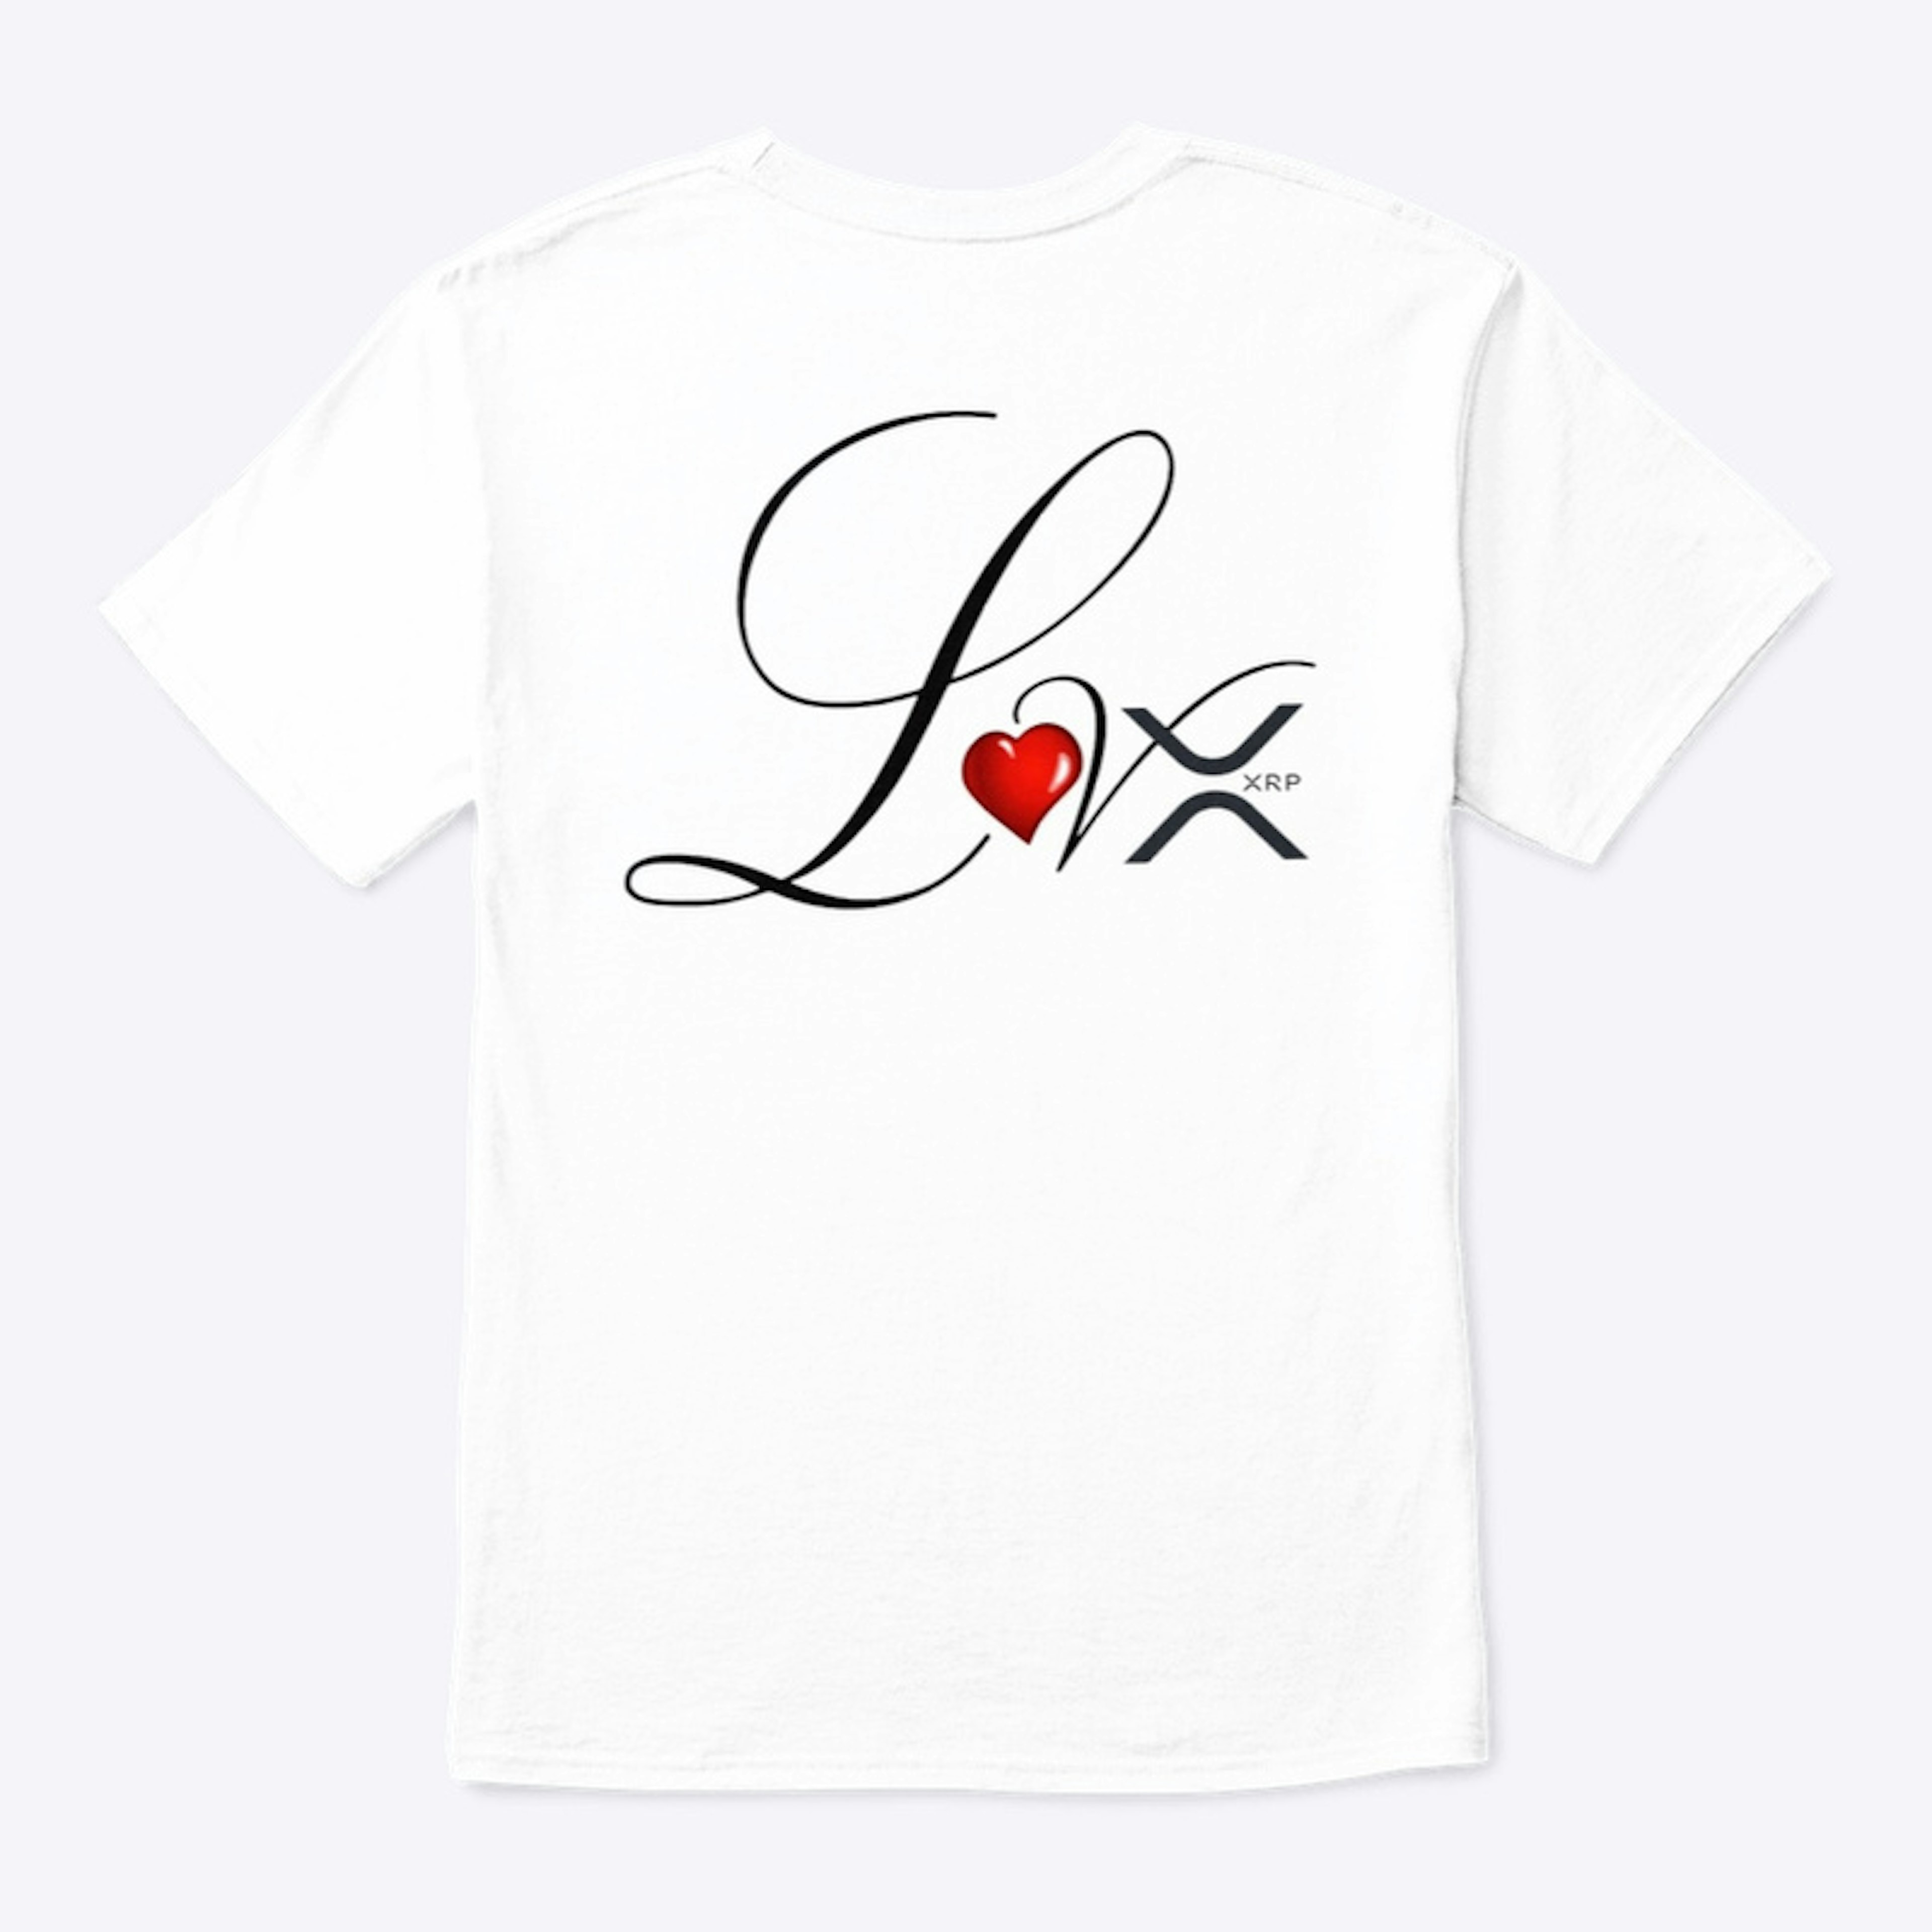 Classic Crew Neck T-Shirt LOVE XRP (1)